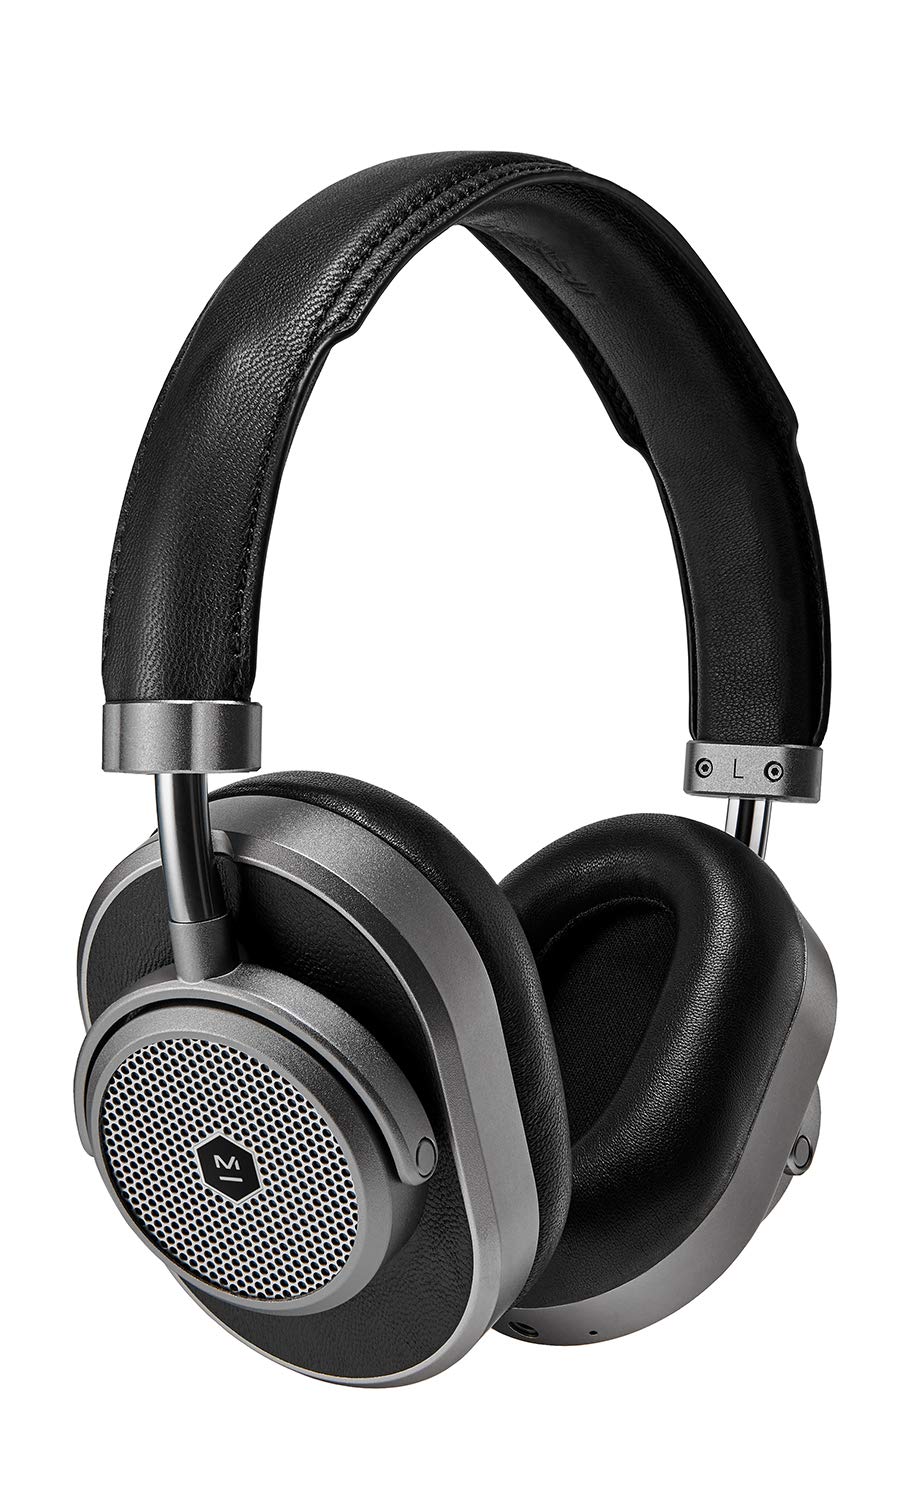 Master & Dynamic MW65 Auriculares inalámbricos con cancelación activa de ruido (Anc) - Auriculares supraaurales Bluetooth con micrófono - Gunmetal/Cuero negro